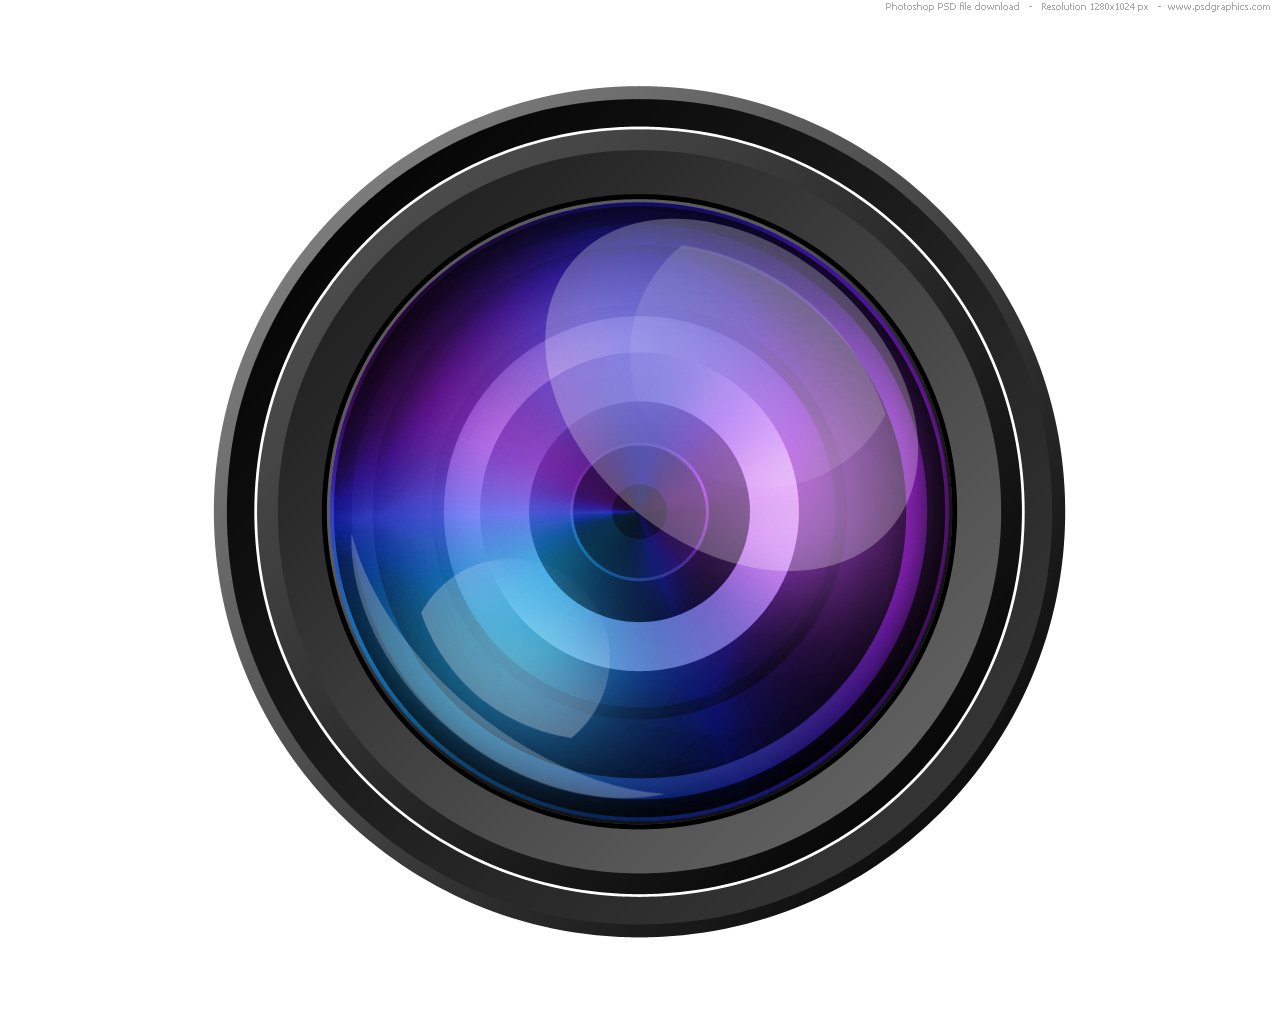 camera-lens-icon